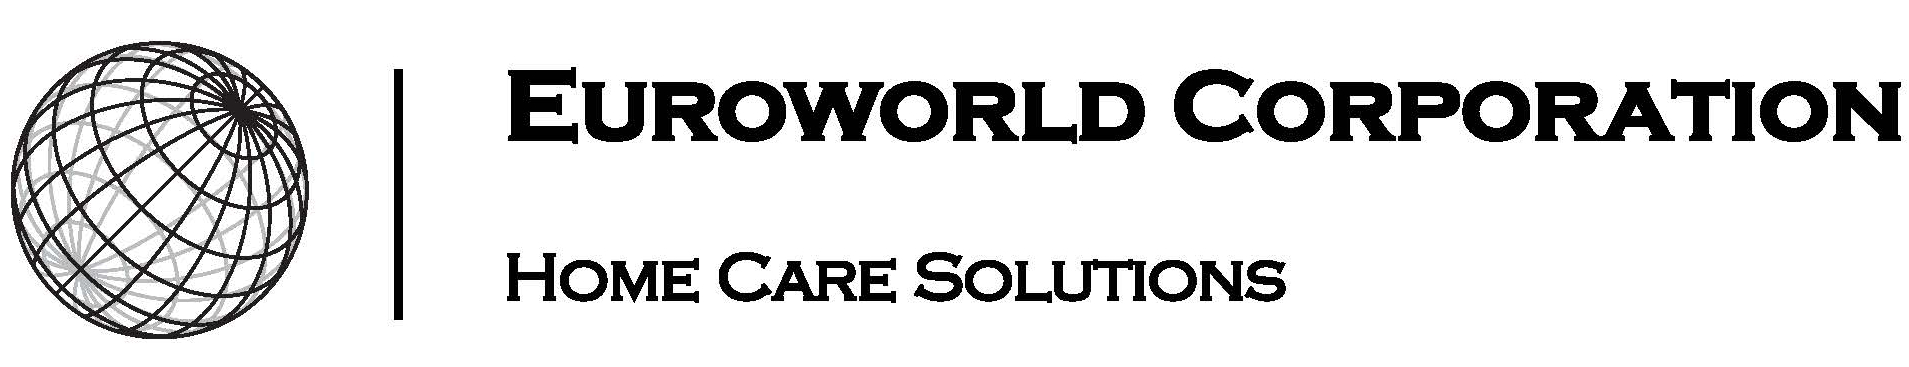 Euroworld Corporation